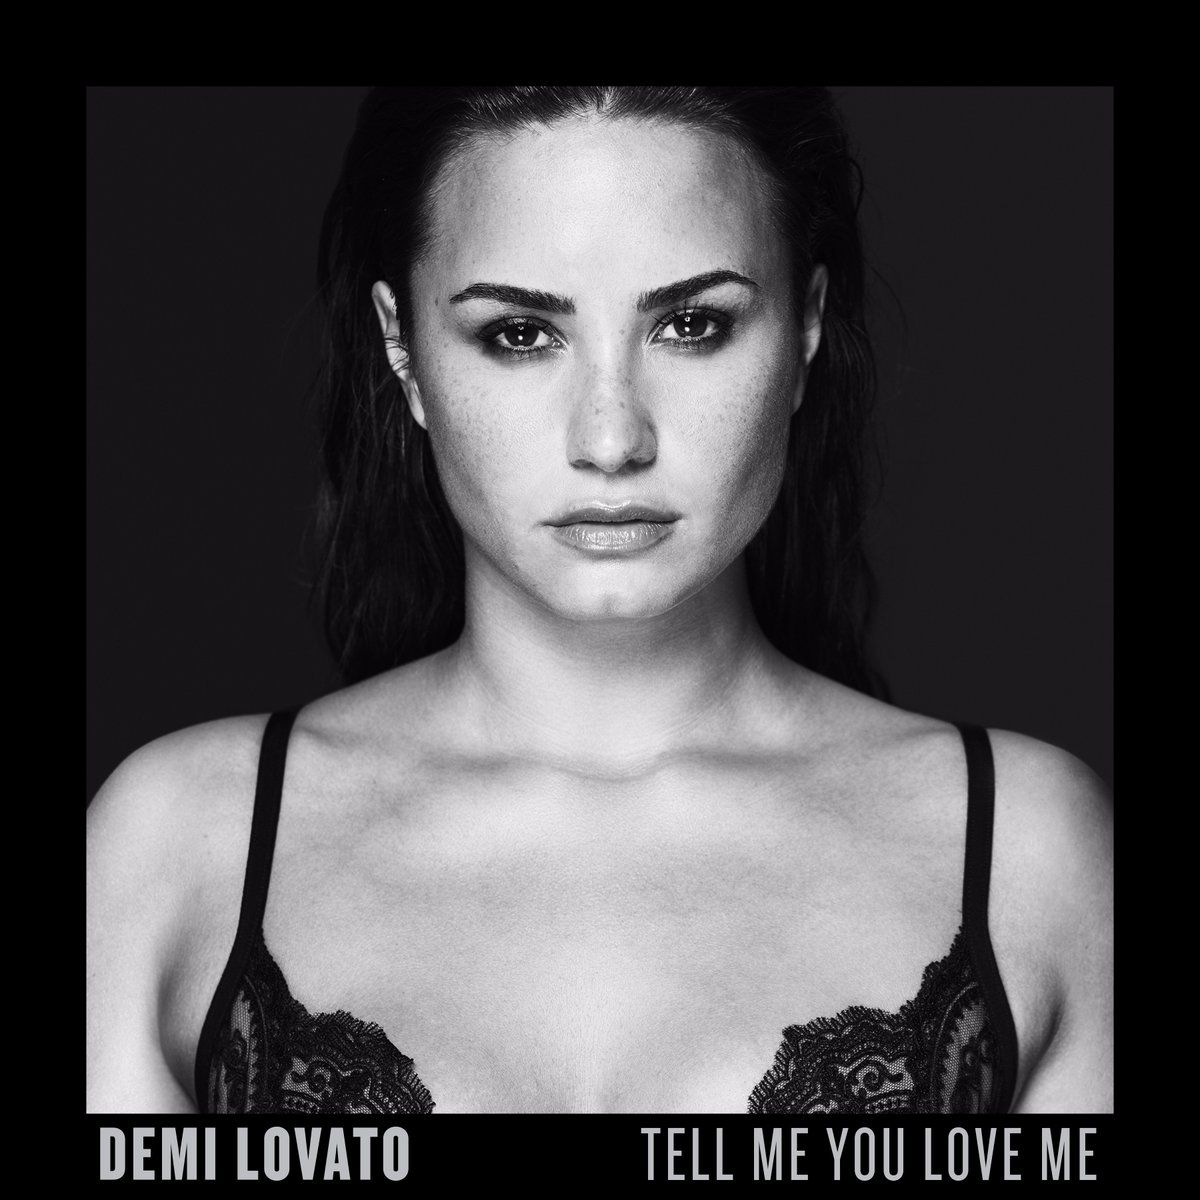 dh9qurvu0ael95i Demi Lovato announces new album, shares title track Tell Me You Love Me: Stream